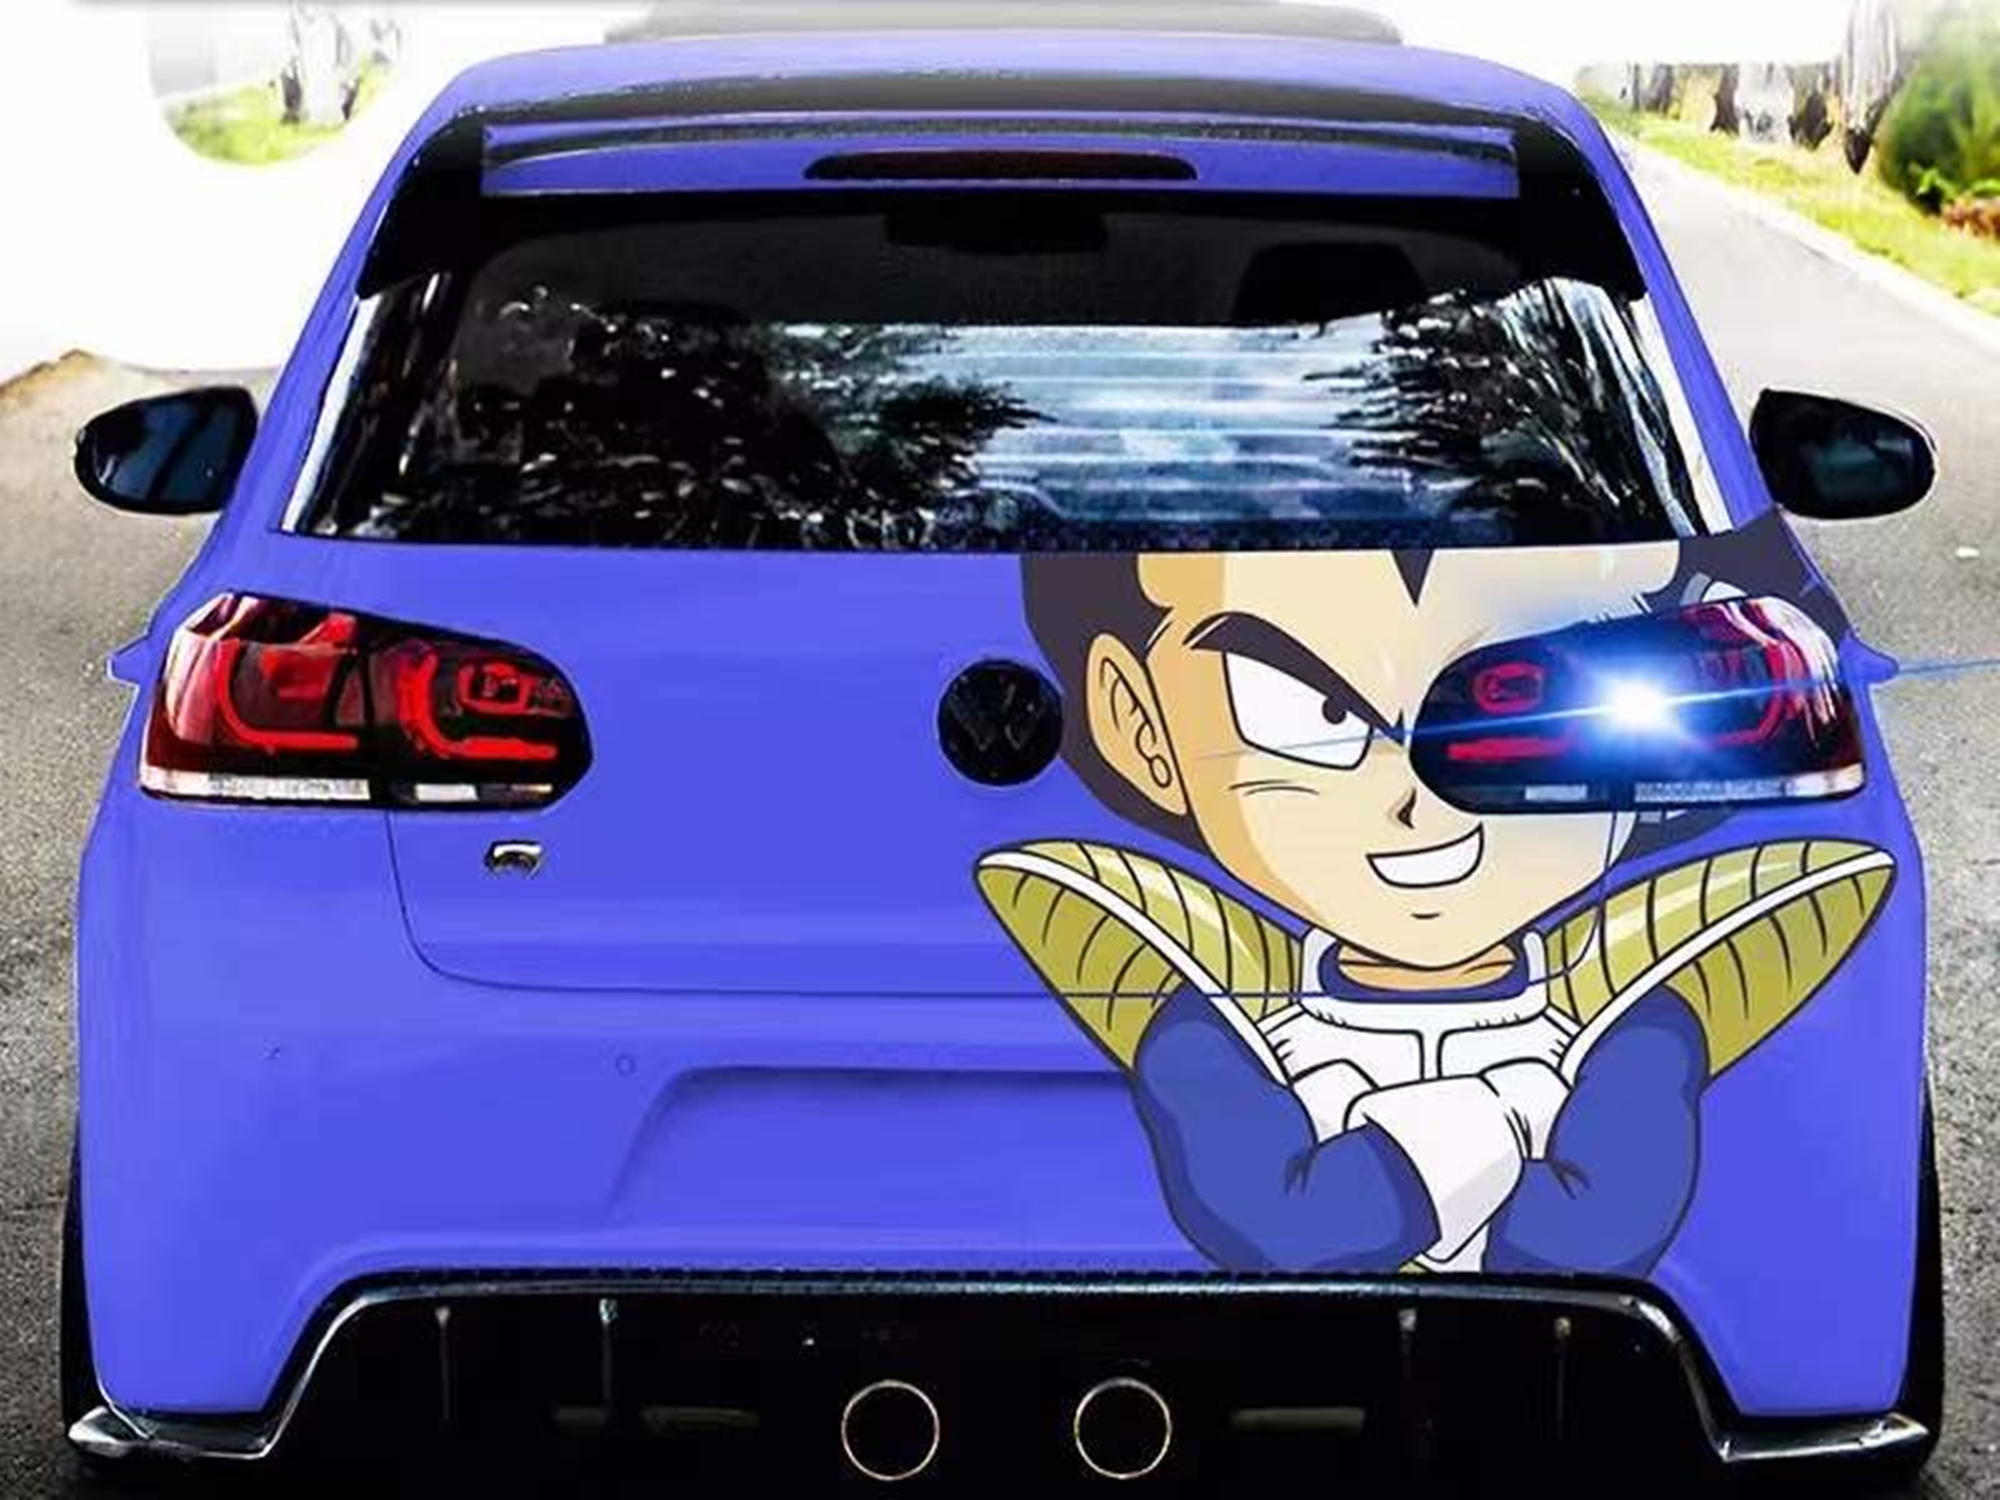 SRBB0275 Vegeta Final Flash Car Window Decal Sticker anime DRAGON